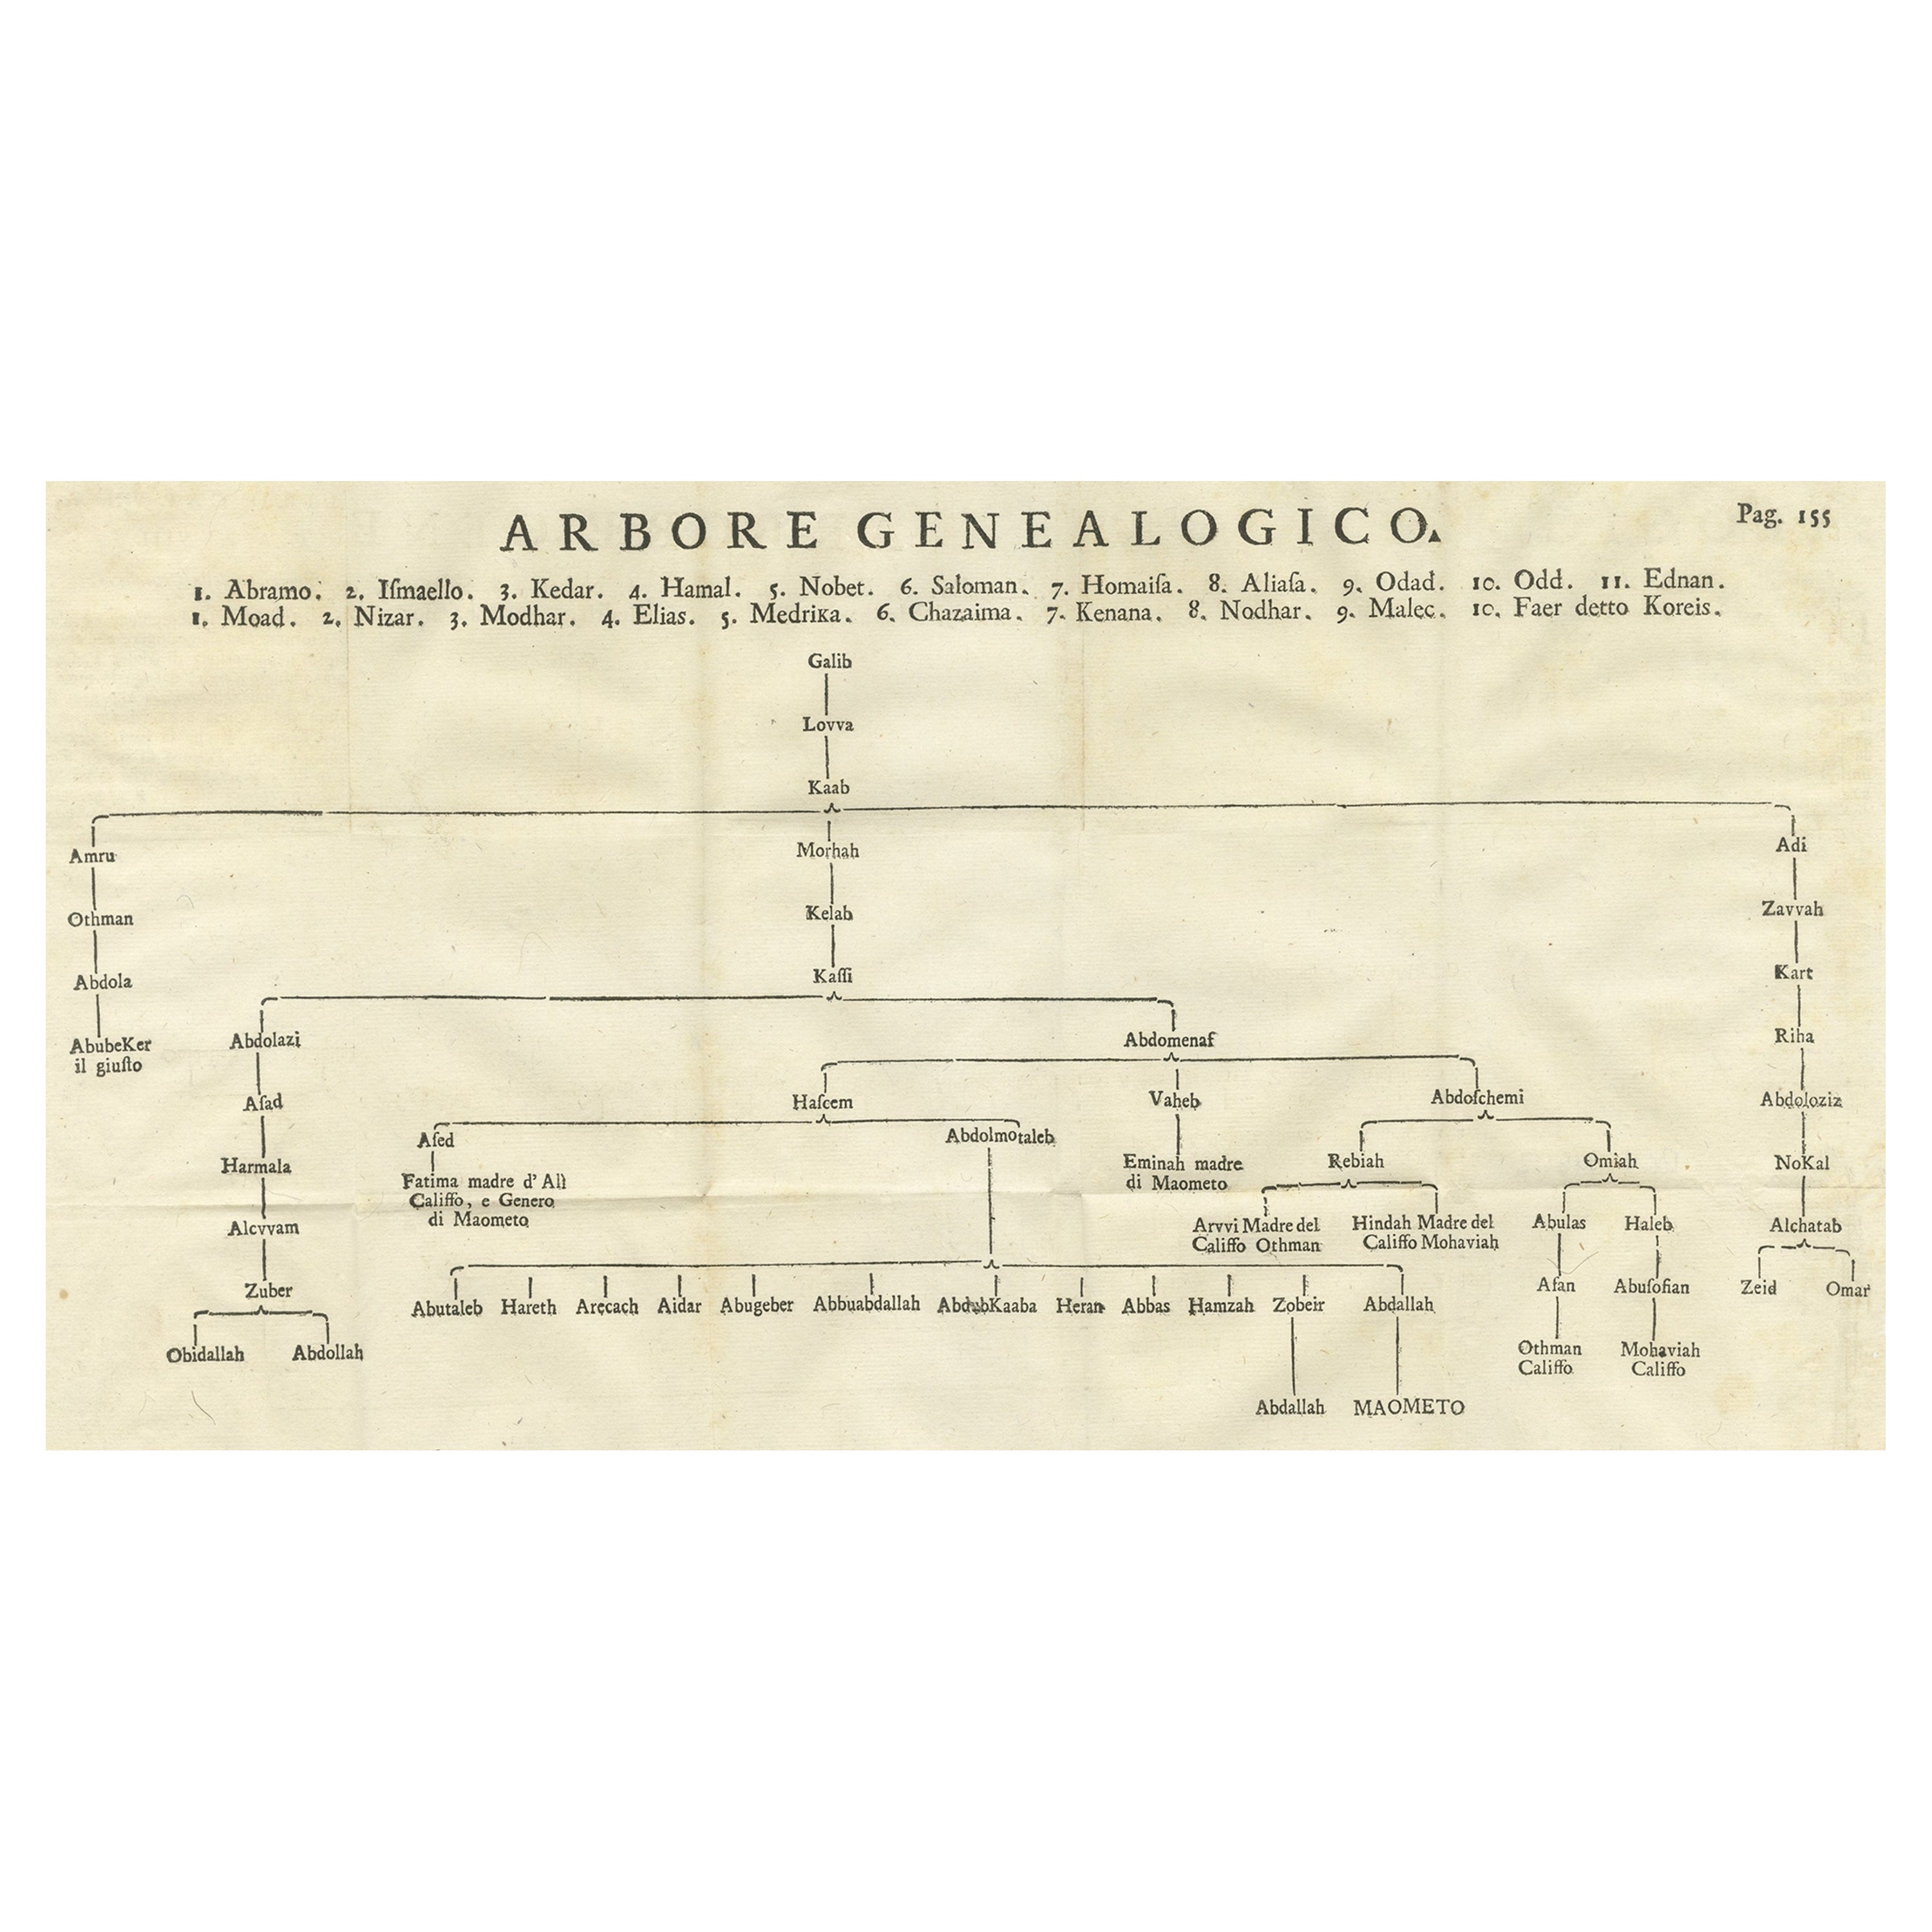 Antique Print Titled 'Arbore Genealogico'. Family Tree of Muhammad, 1745